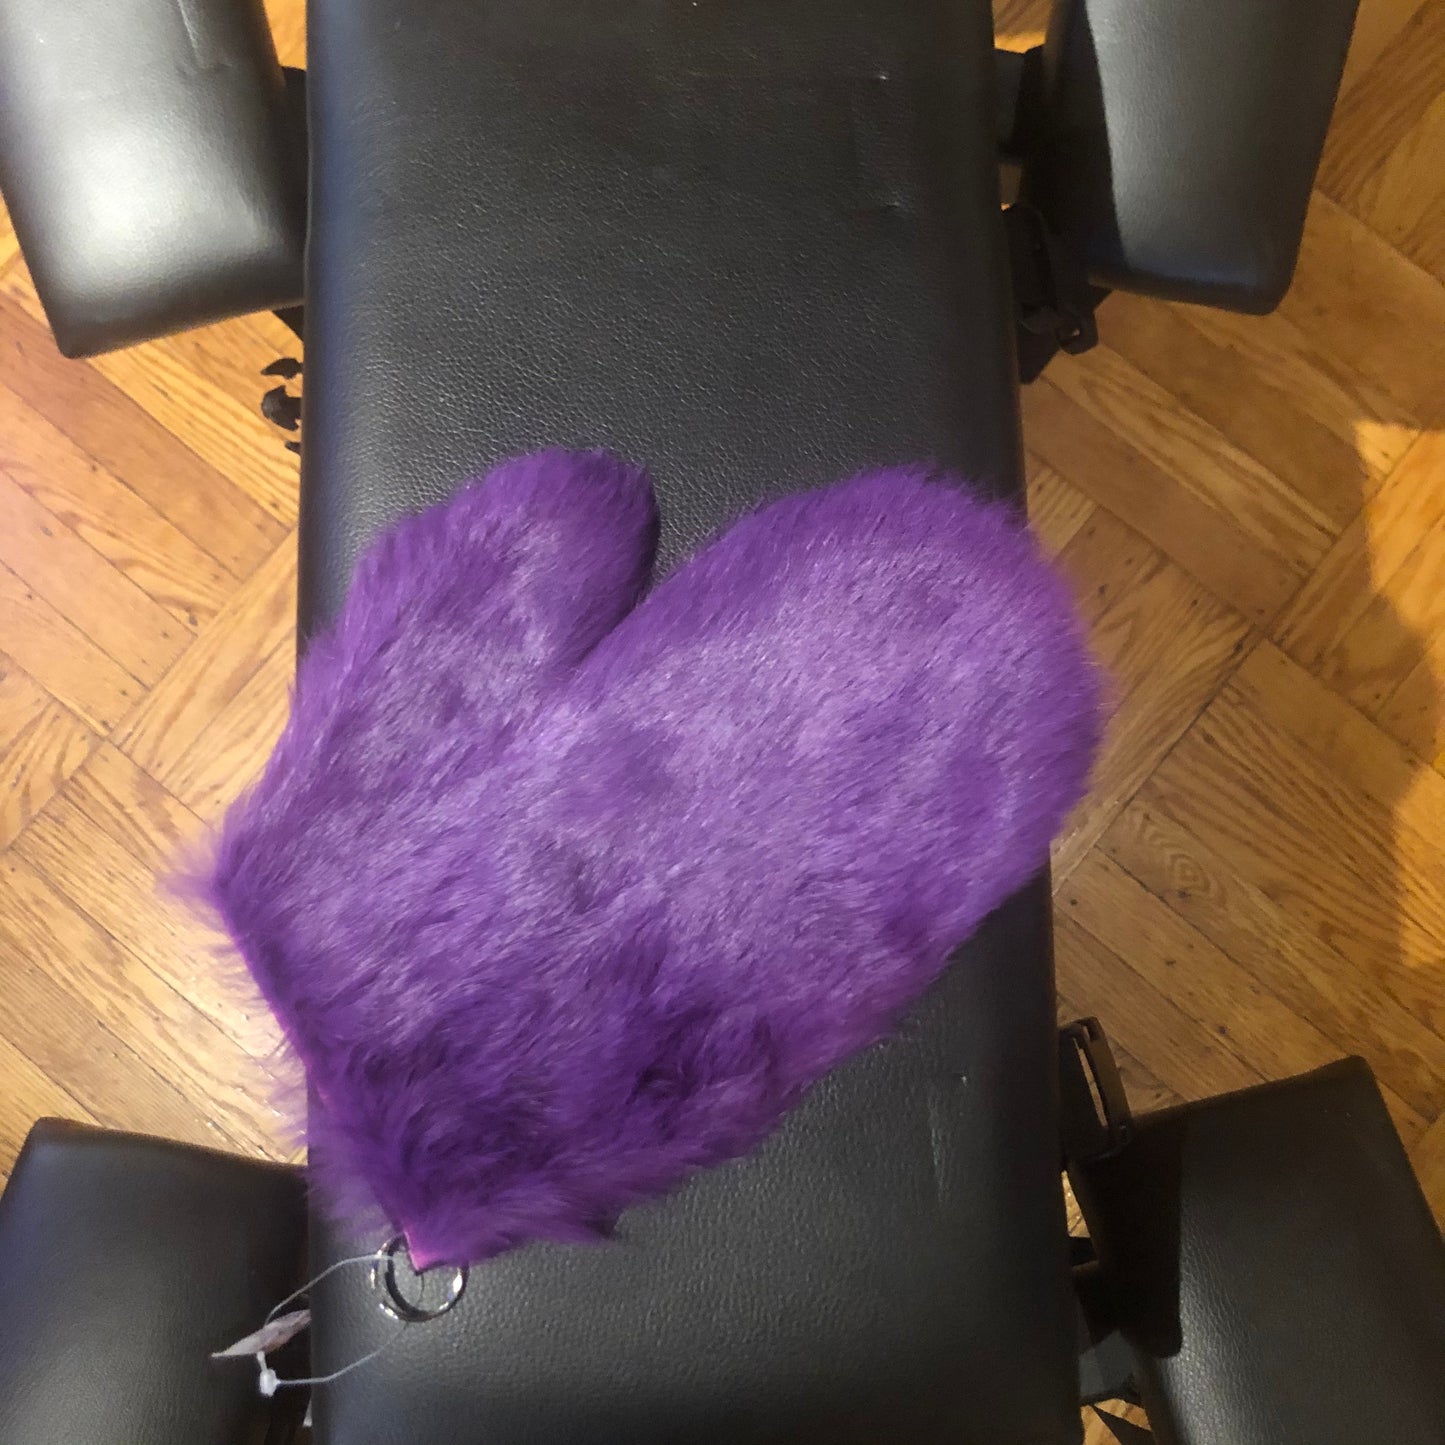 Right hand purple rabbit fur spanking mitt